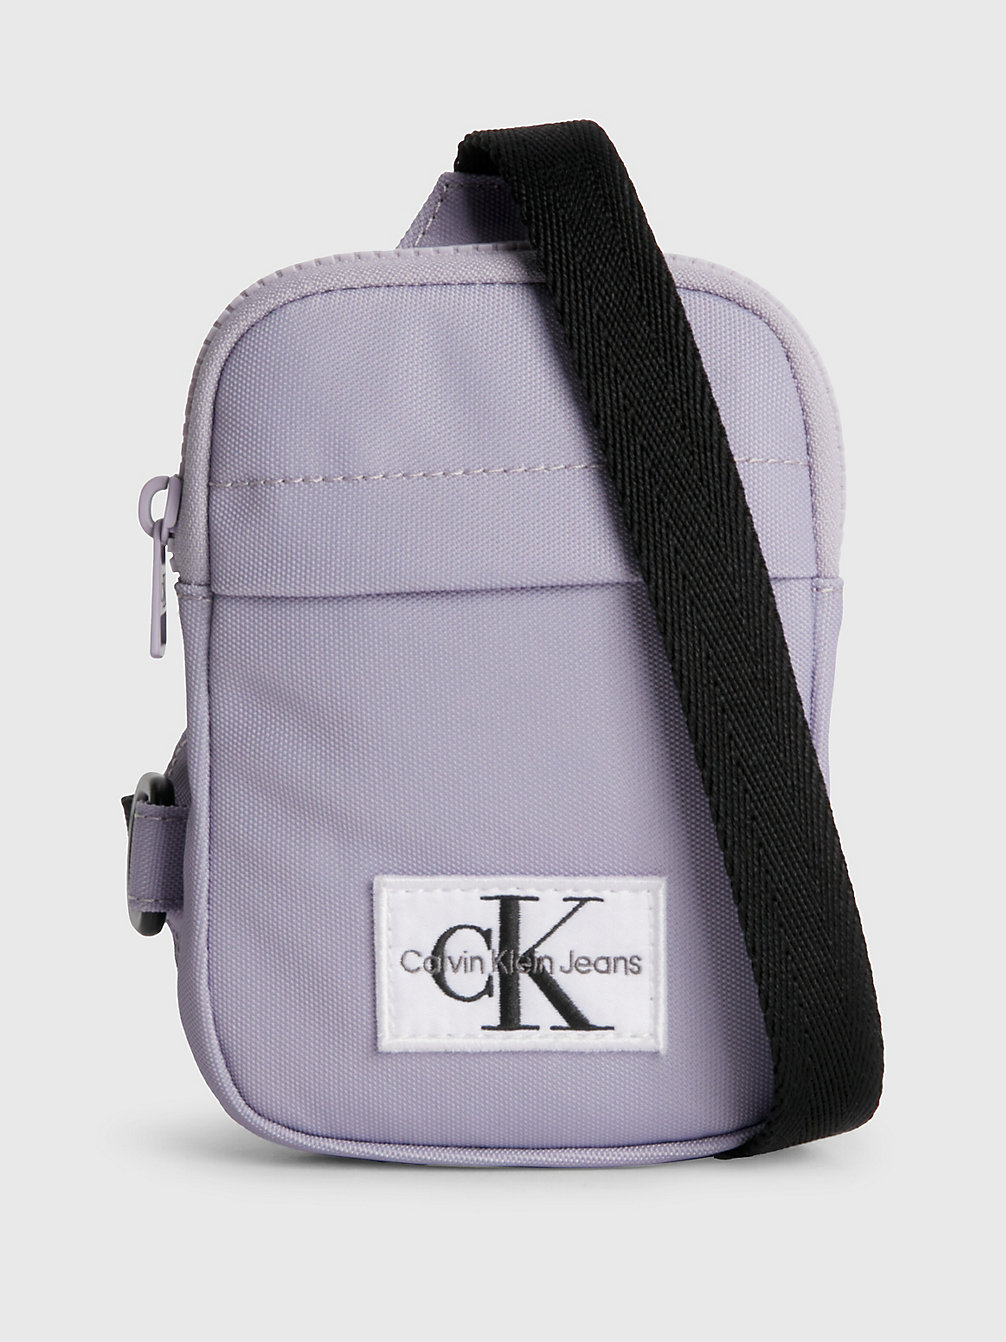 SMOKY LILAC > Unisex-Logo-Crossover-Bag > undefined kids unisex - Calvin Klein